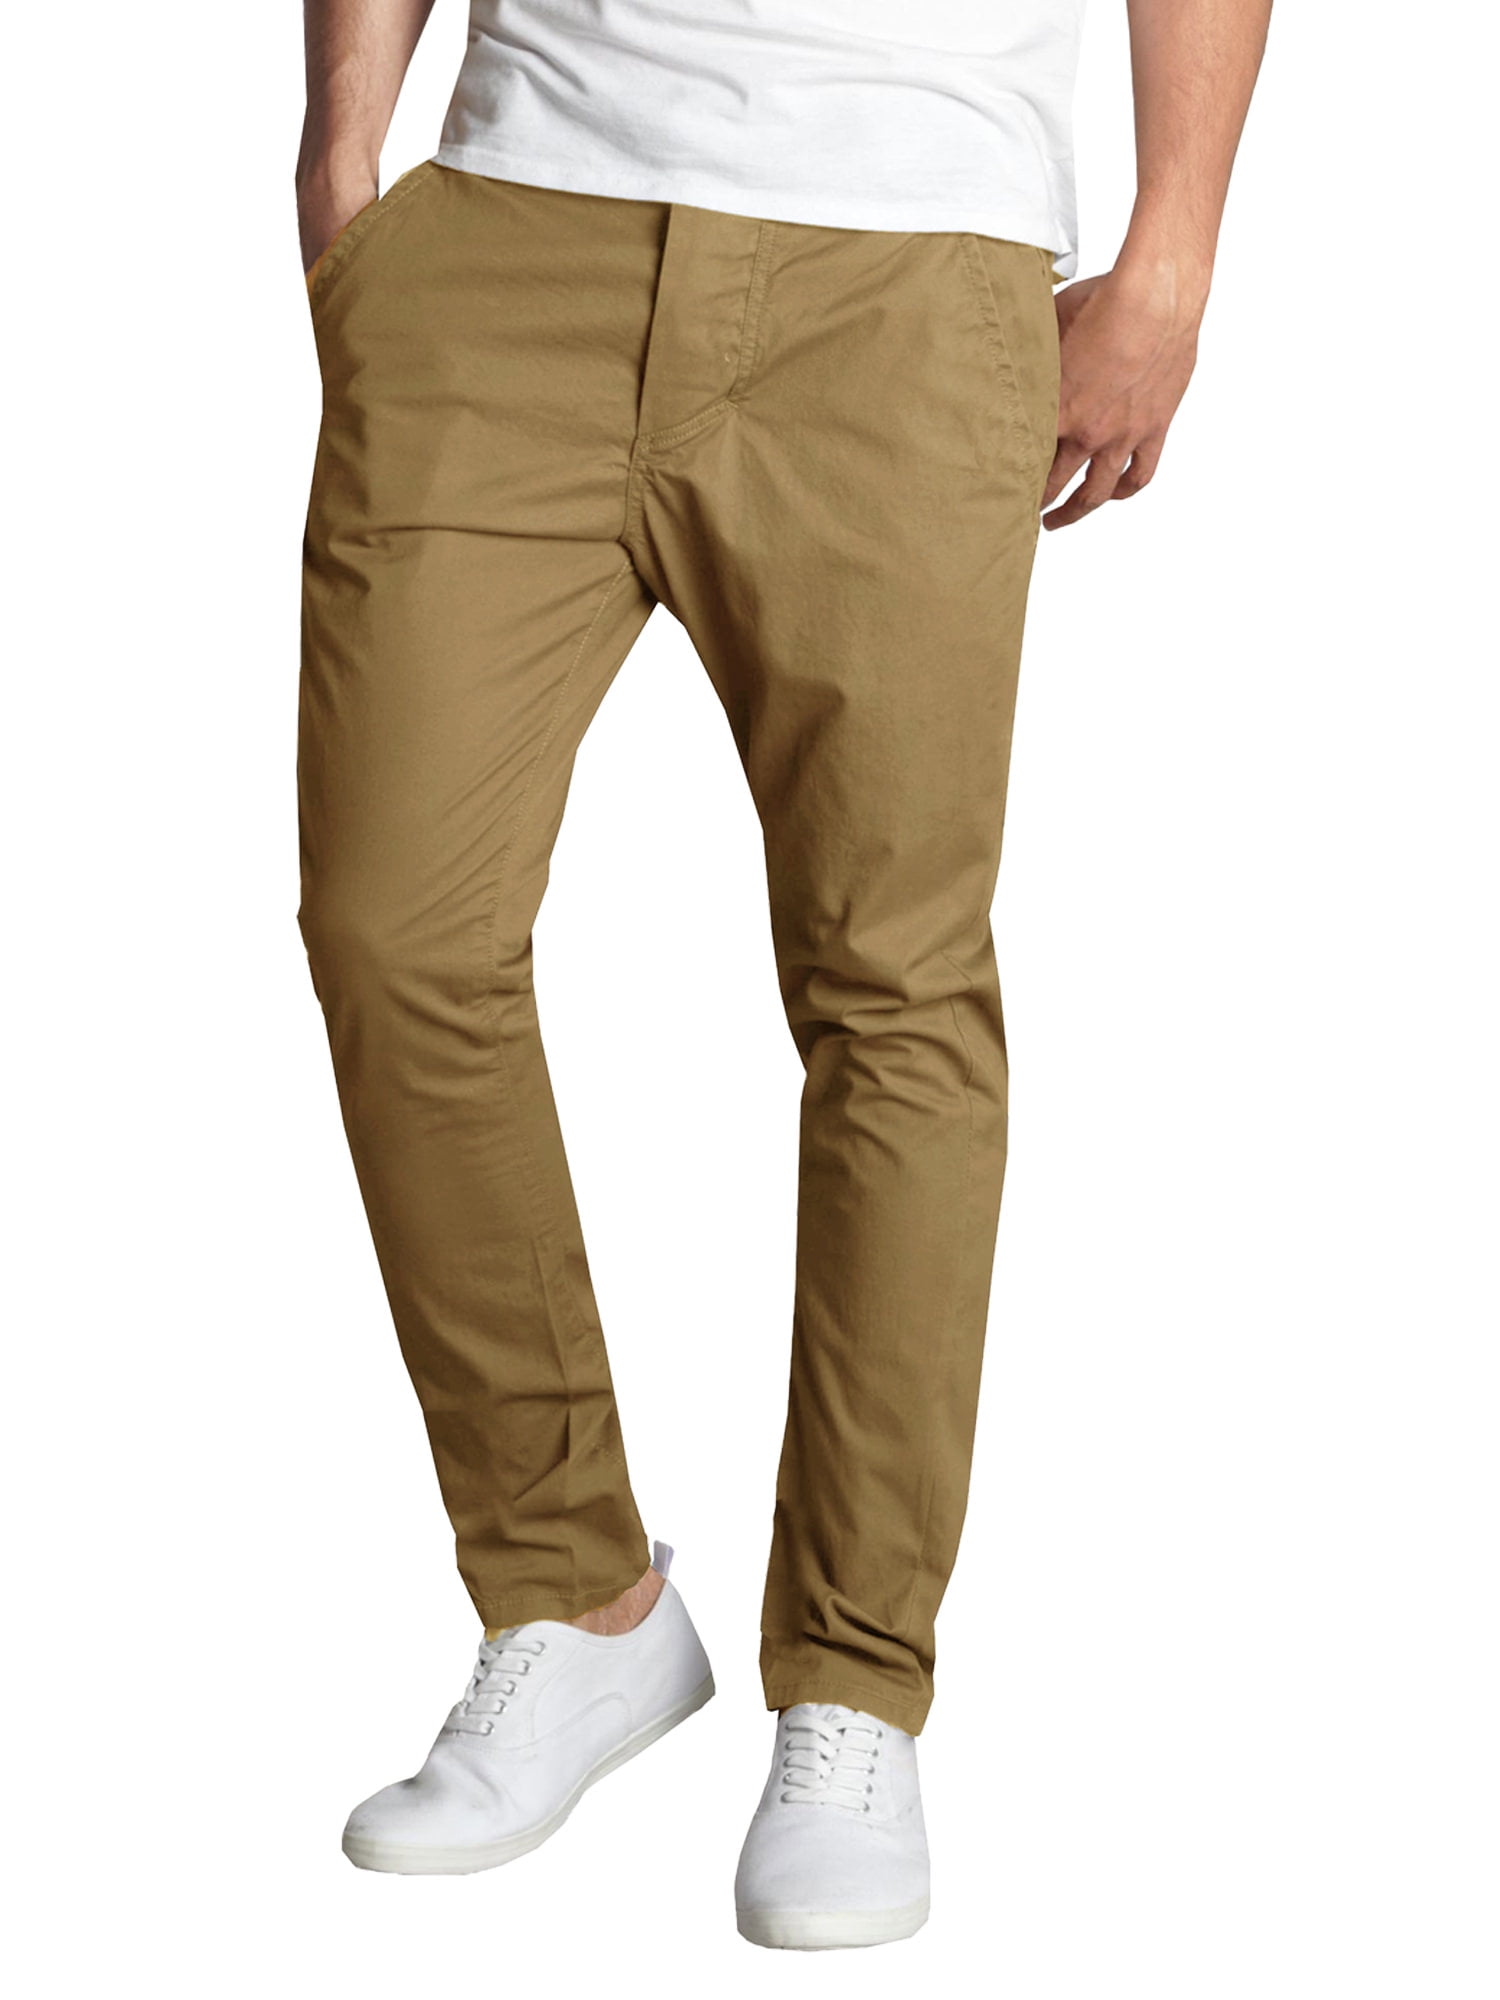 Mens Cotton Chino Pants Slim Fit Casual Stretch - Walmart.com